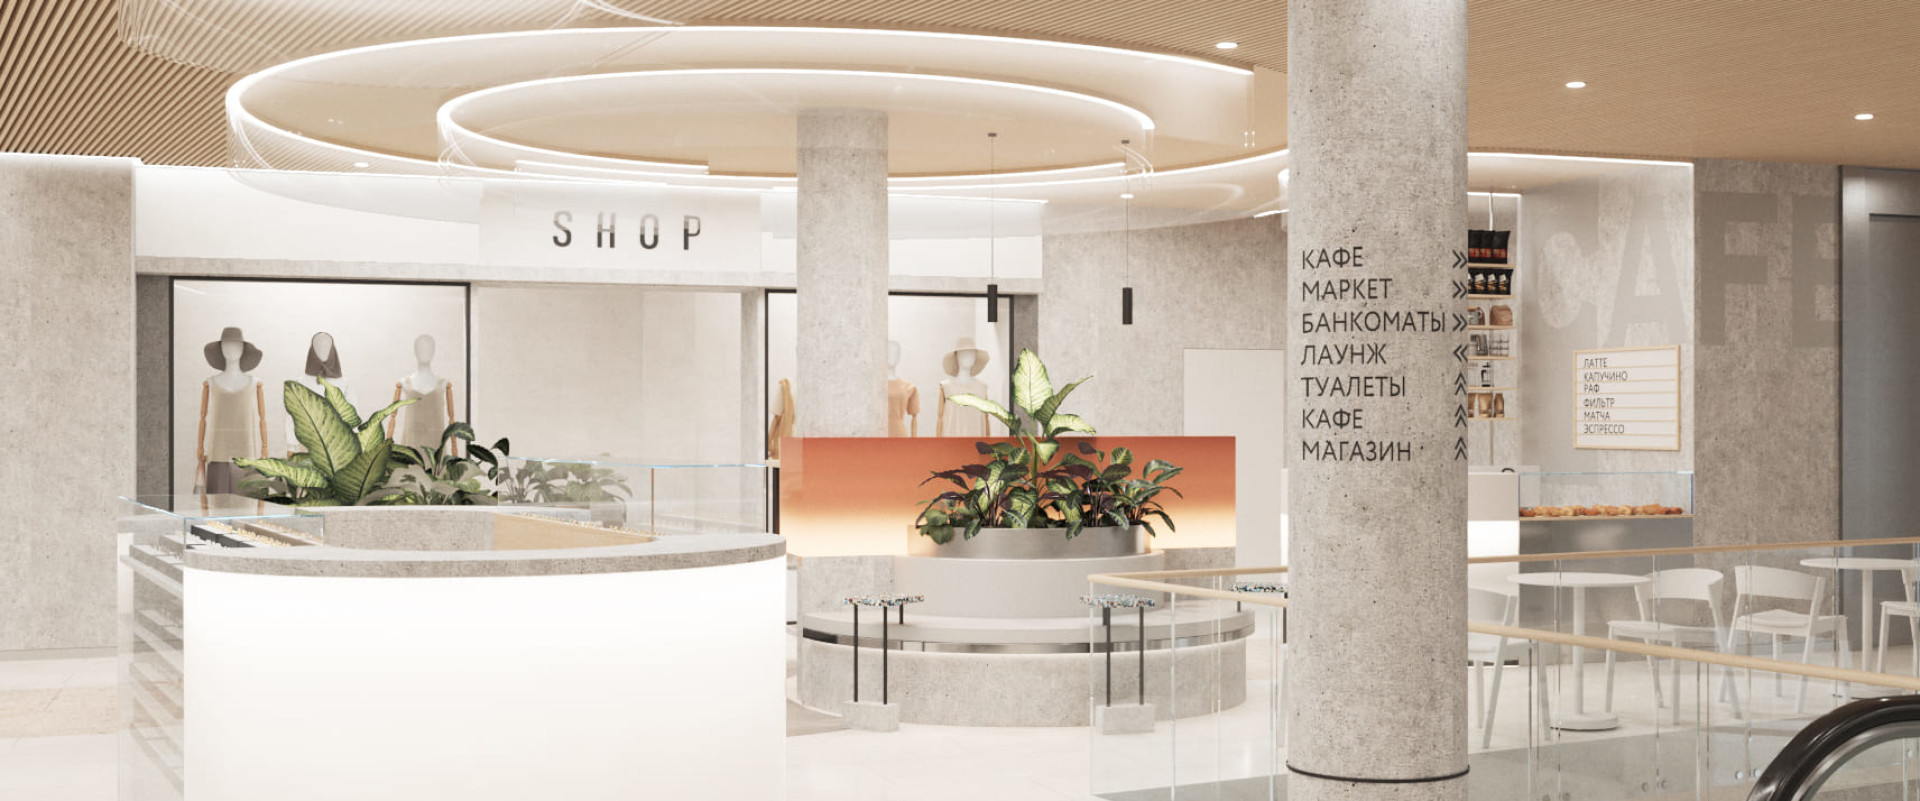 Novoselye business center design 